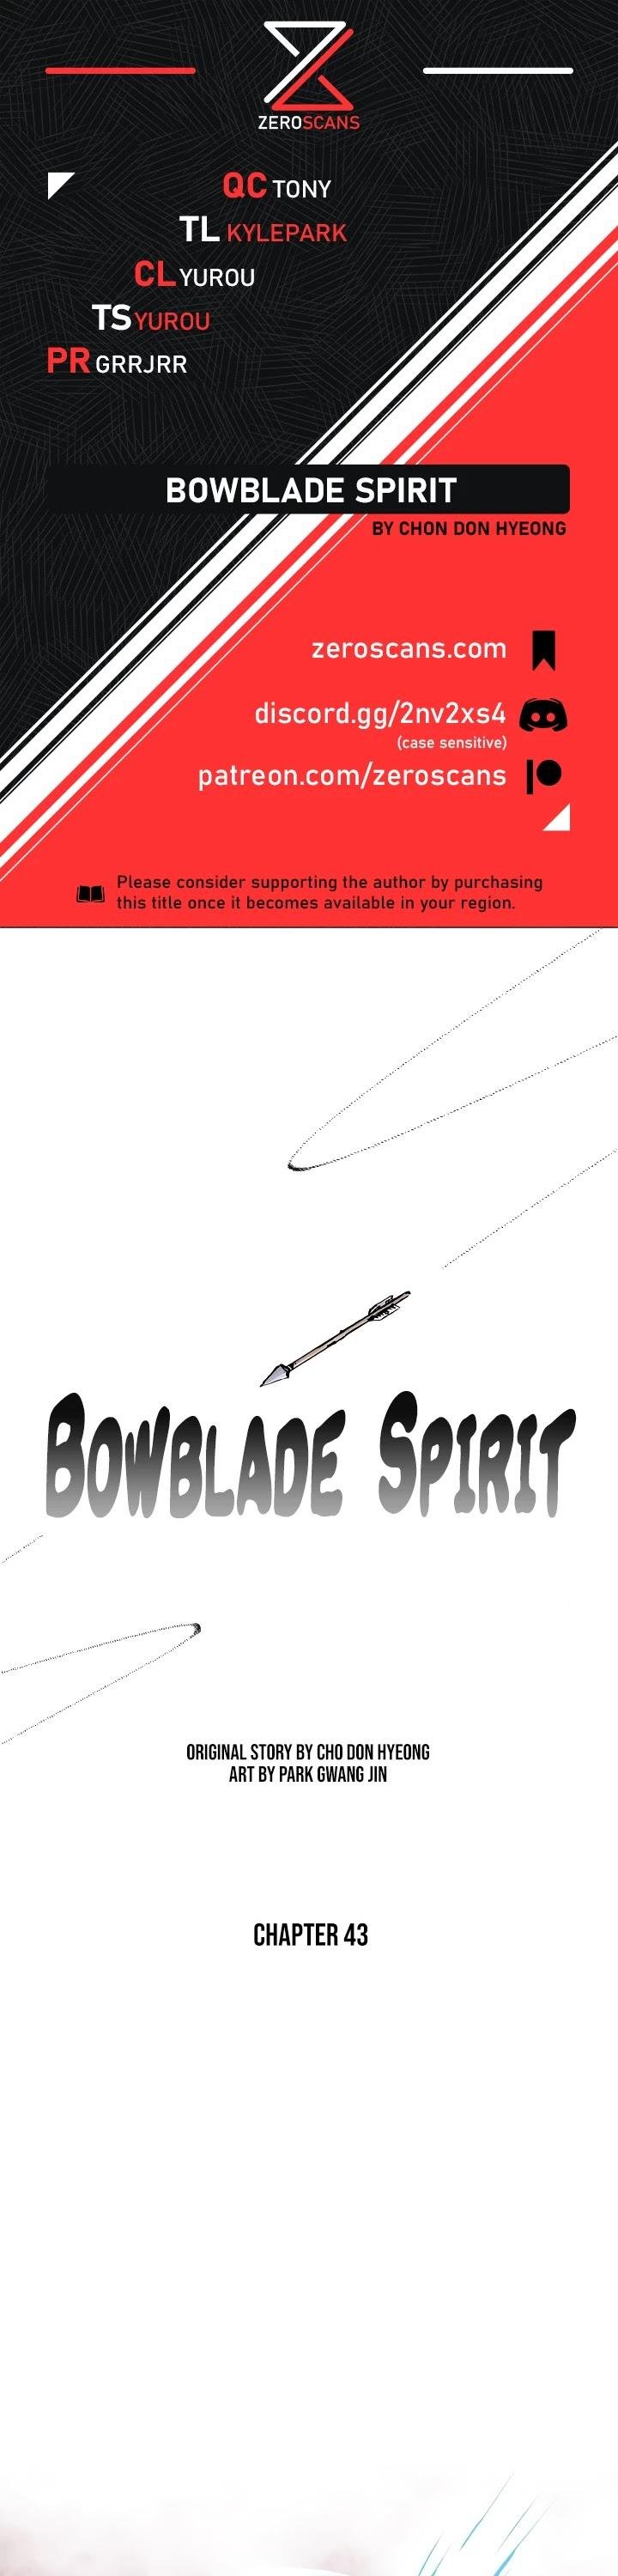 bowblade-spirit-chap-43-0